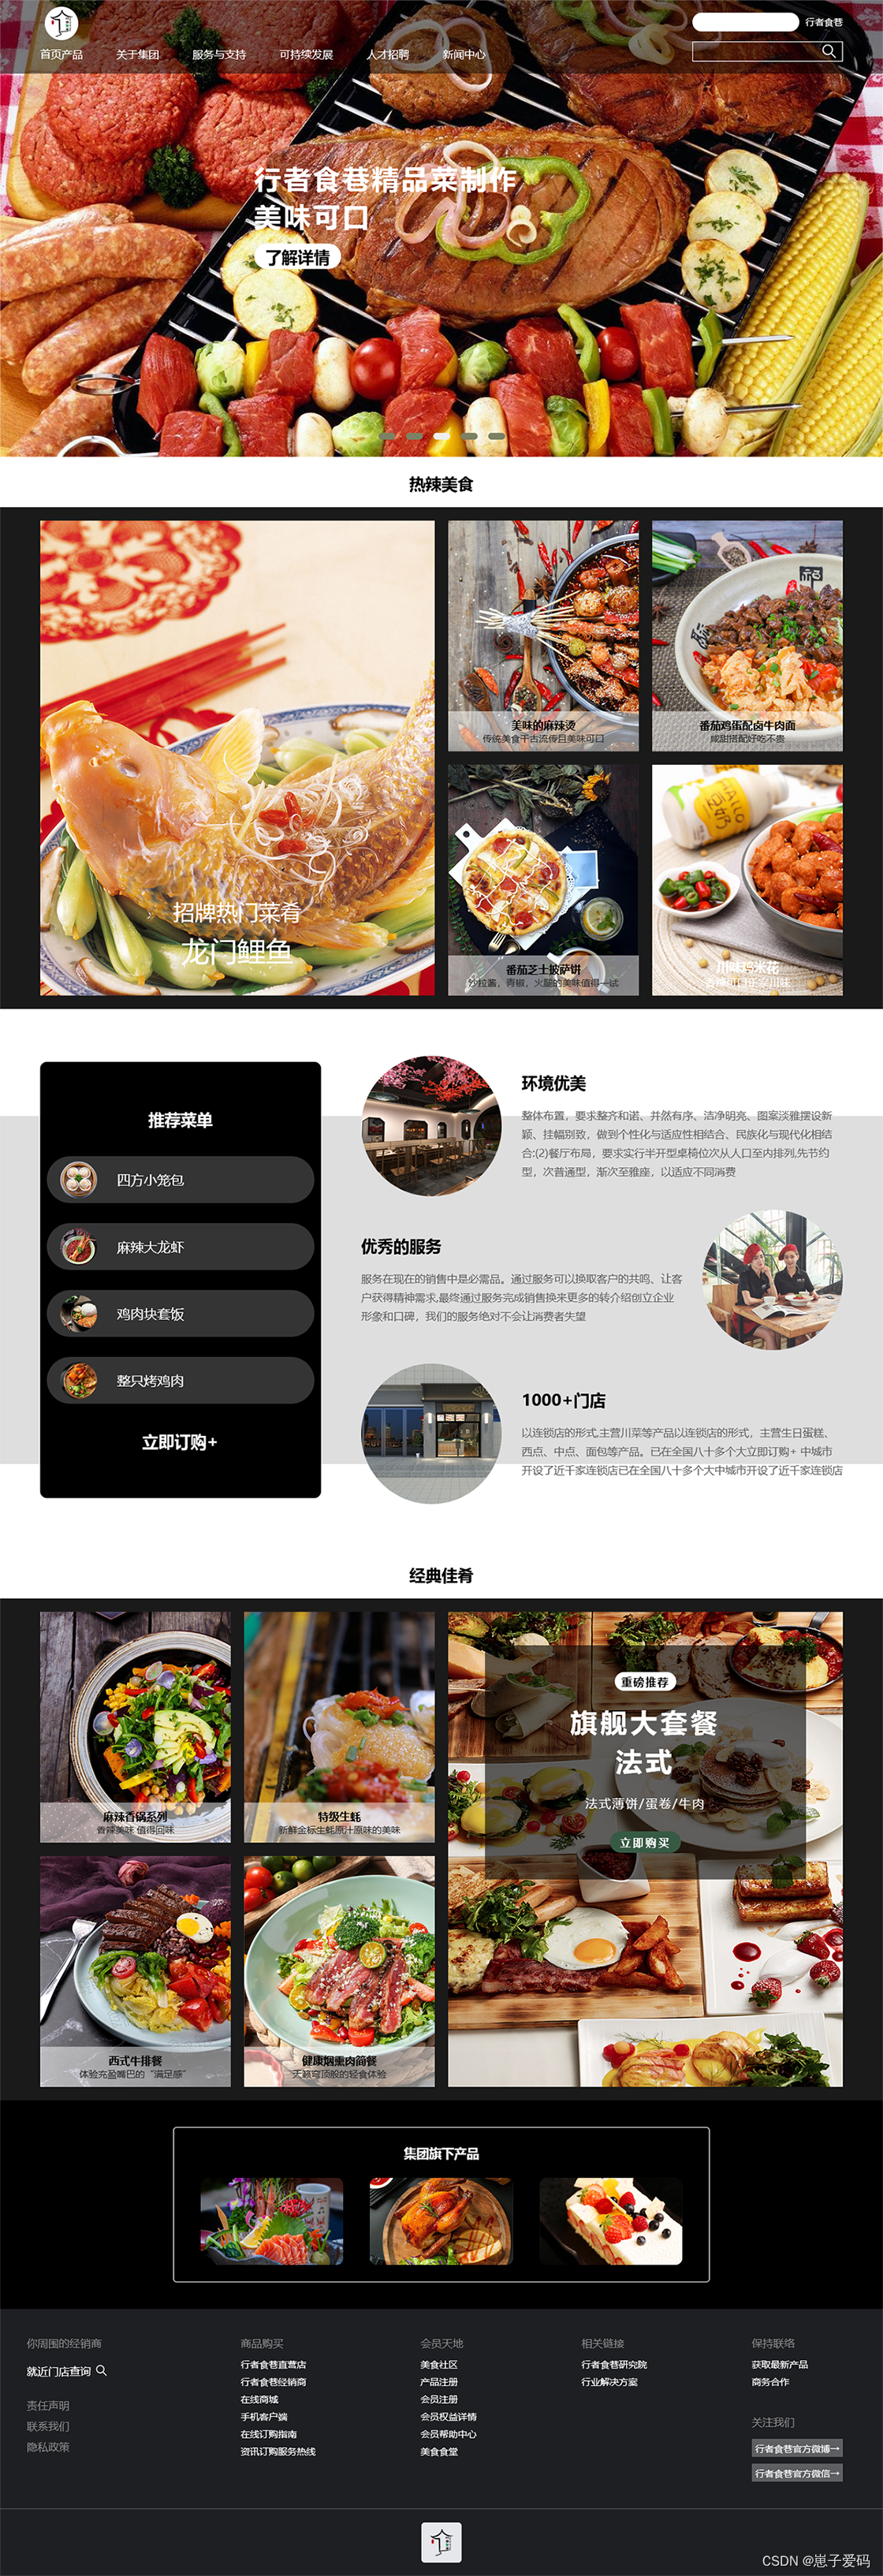 HTML静态网页成品作业(HTML+CSS)——美食企业介绍设计制作(1个页面)